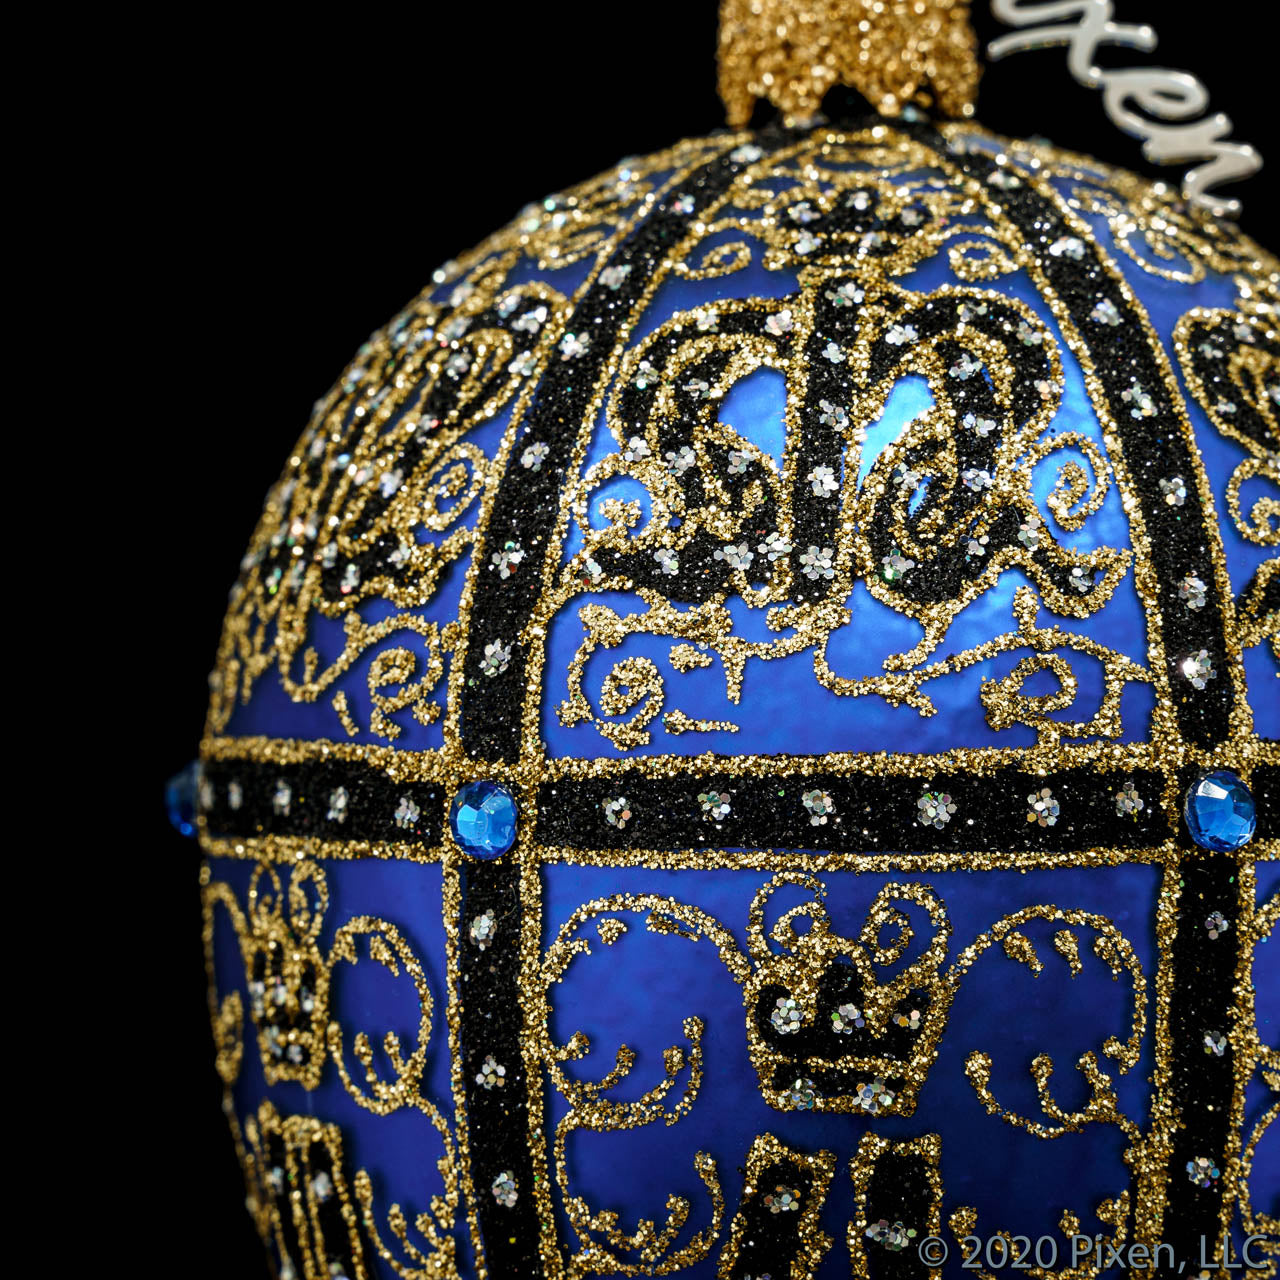 Enigma glass ornament in Blue by Pixen